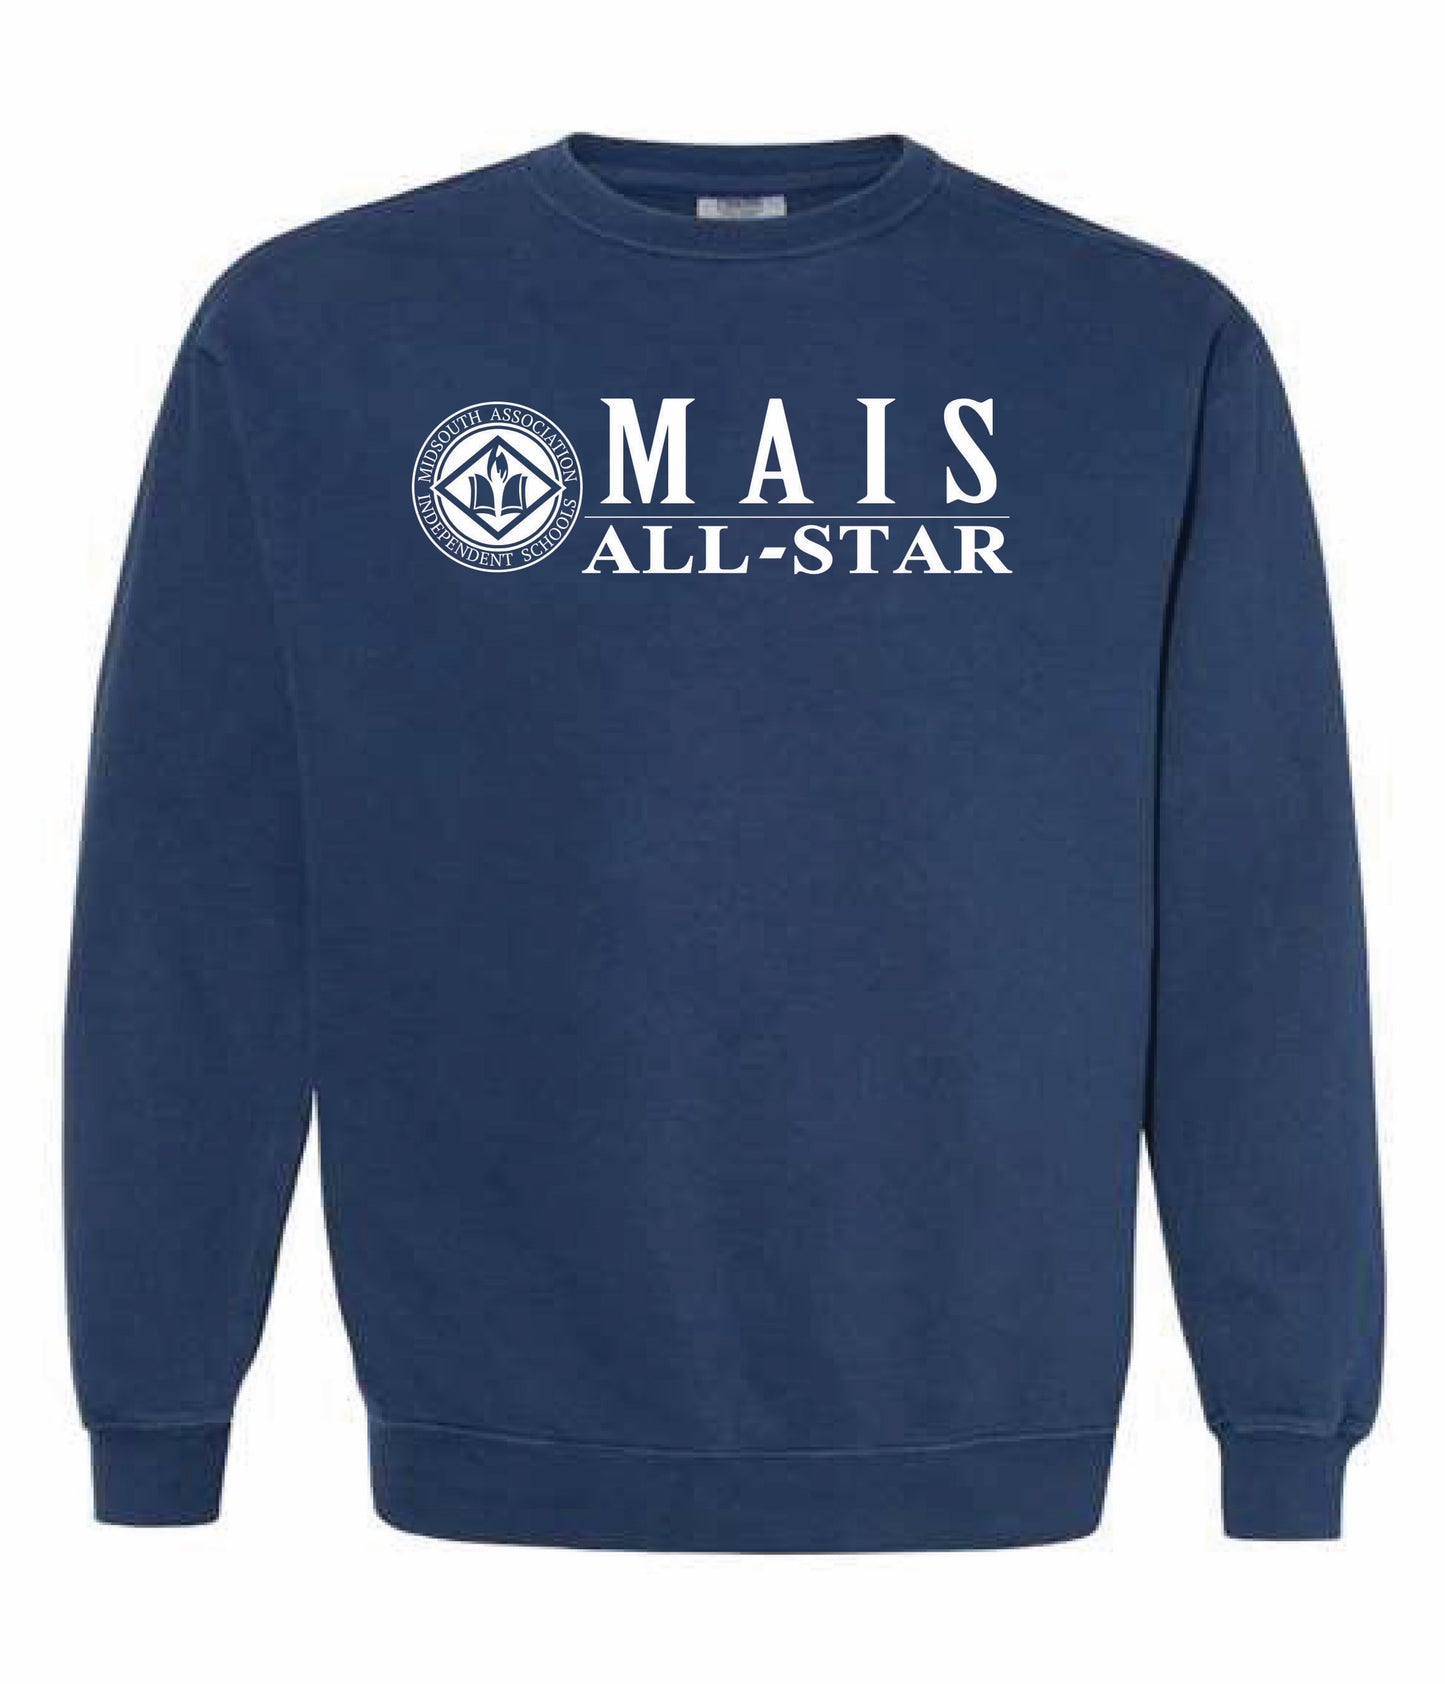 All-Star Player crewneck sweatshirt